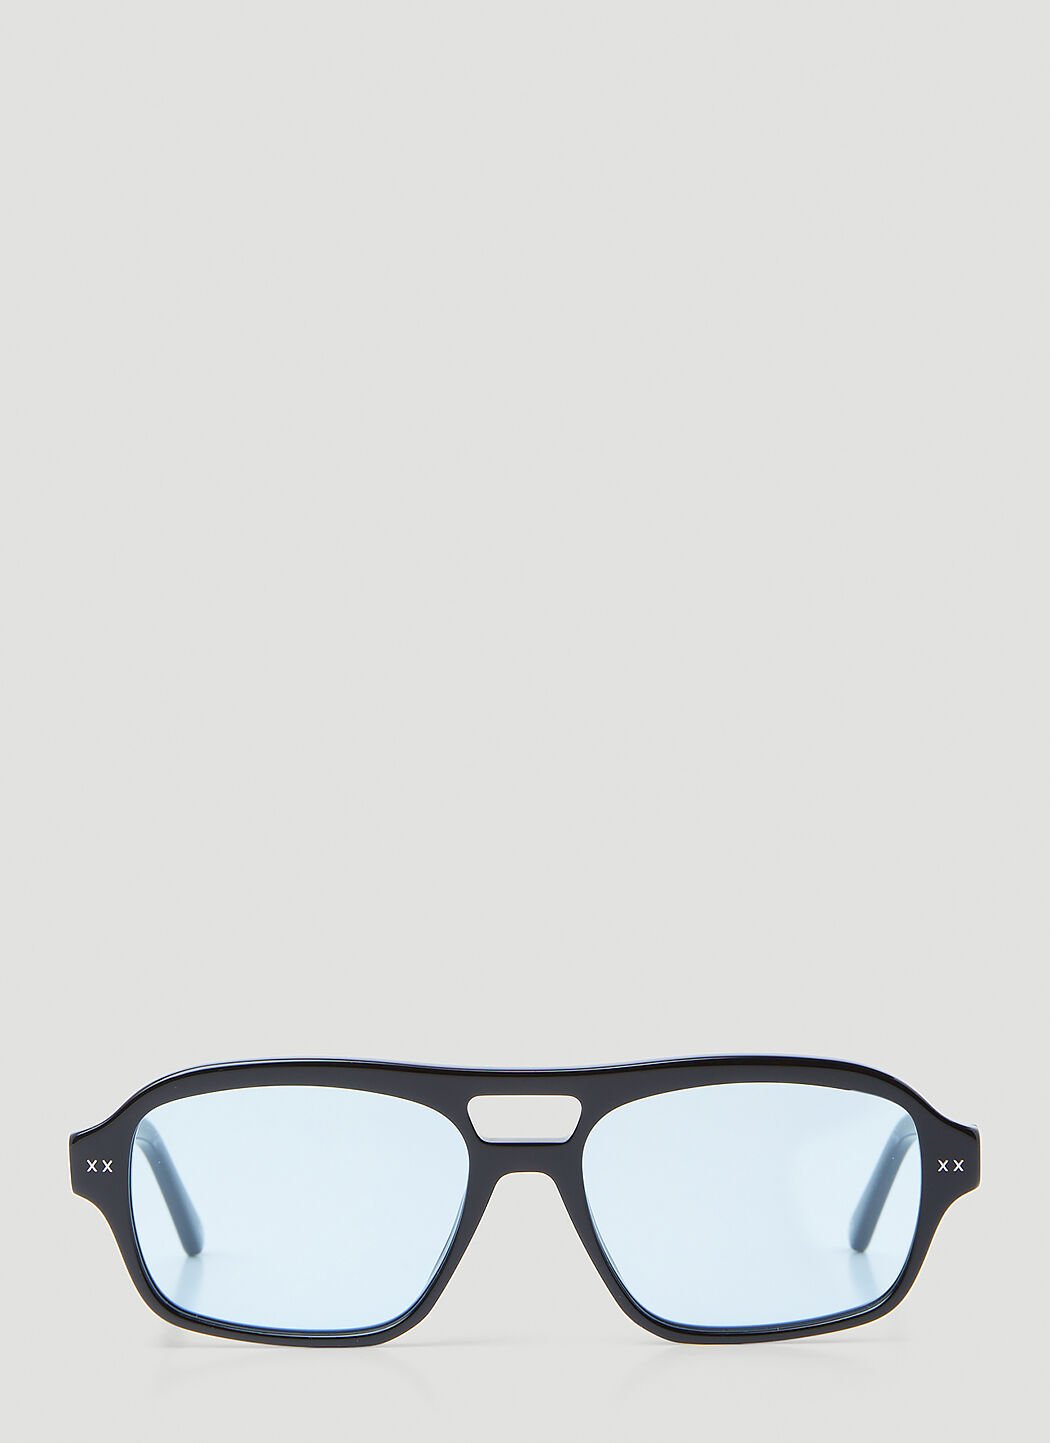 Lexxola Sunglasses for Men: Square & Rectangular Eyewear | LN-CC®